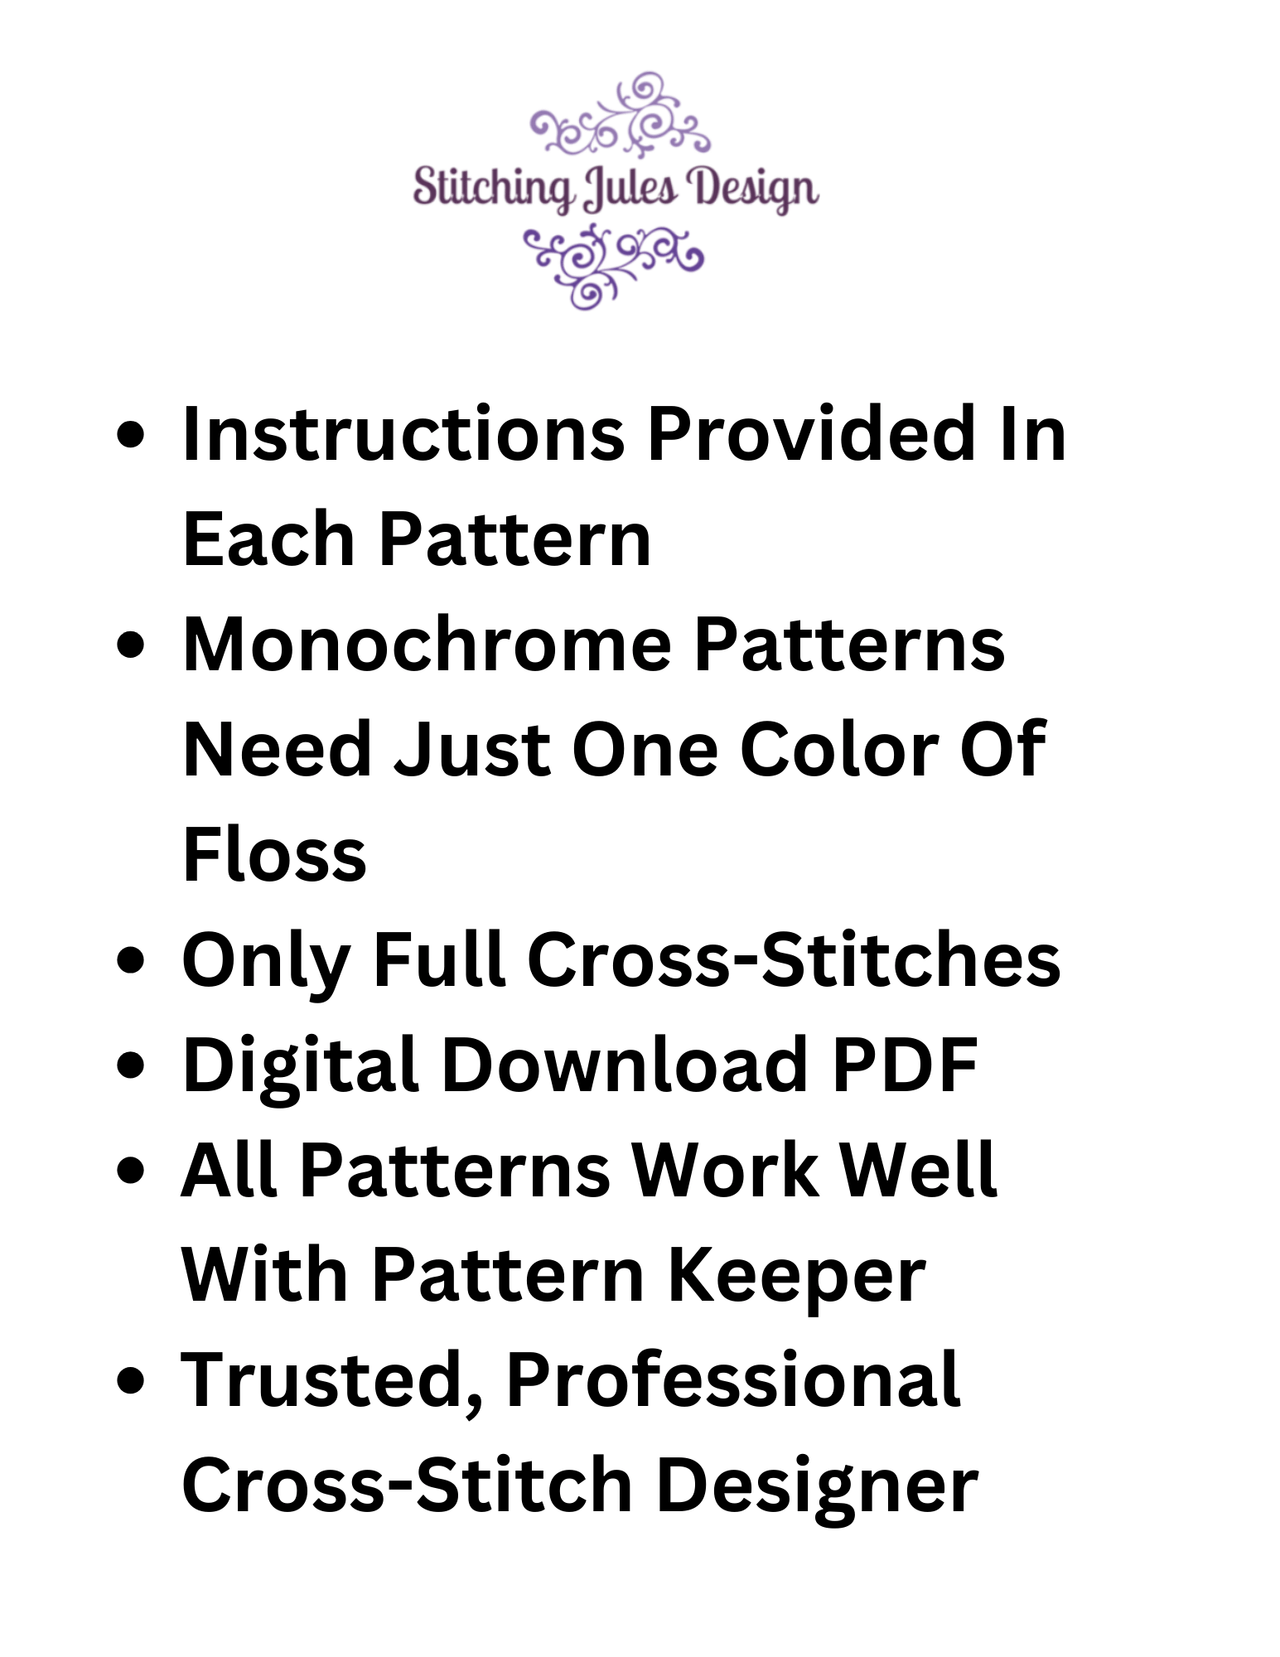 Stitching Jules Design Cross Stitch Pattern Steampunk Monochrome Owl Counted Cross Stitch Pattern | Instant Download PDF